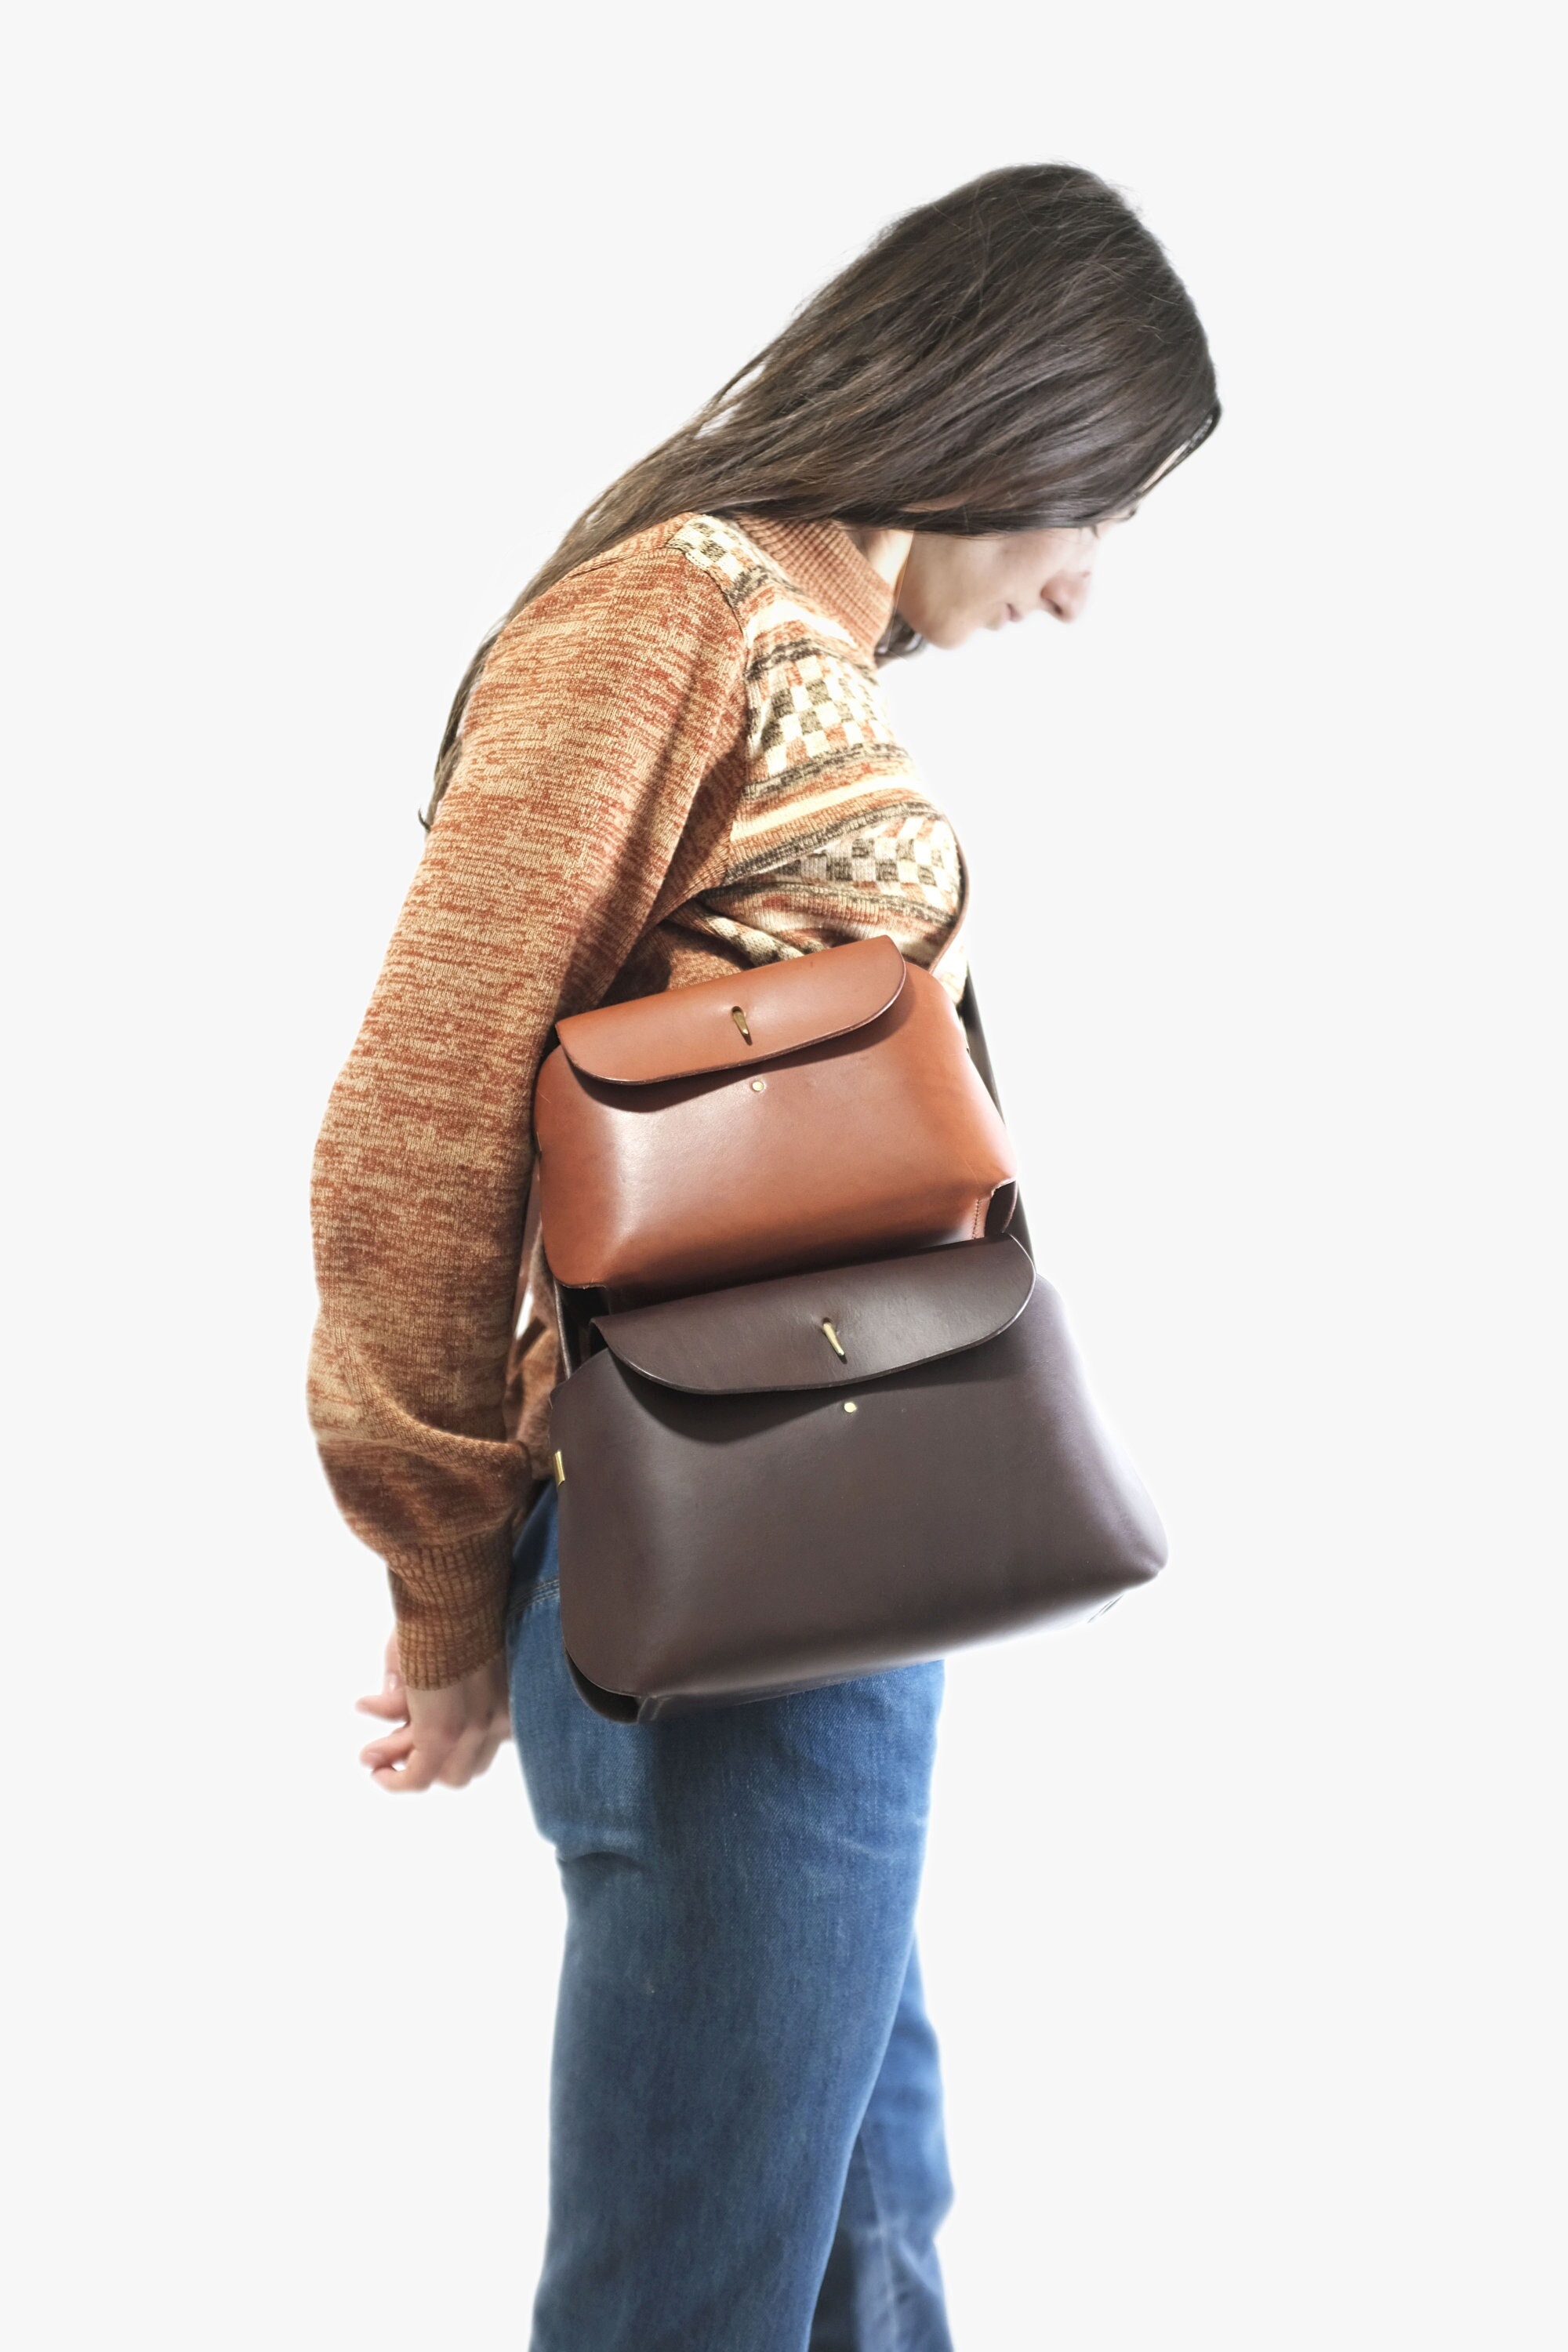 The Oxblood Bloomsbury | Handmade Leather Handbag